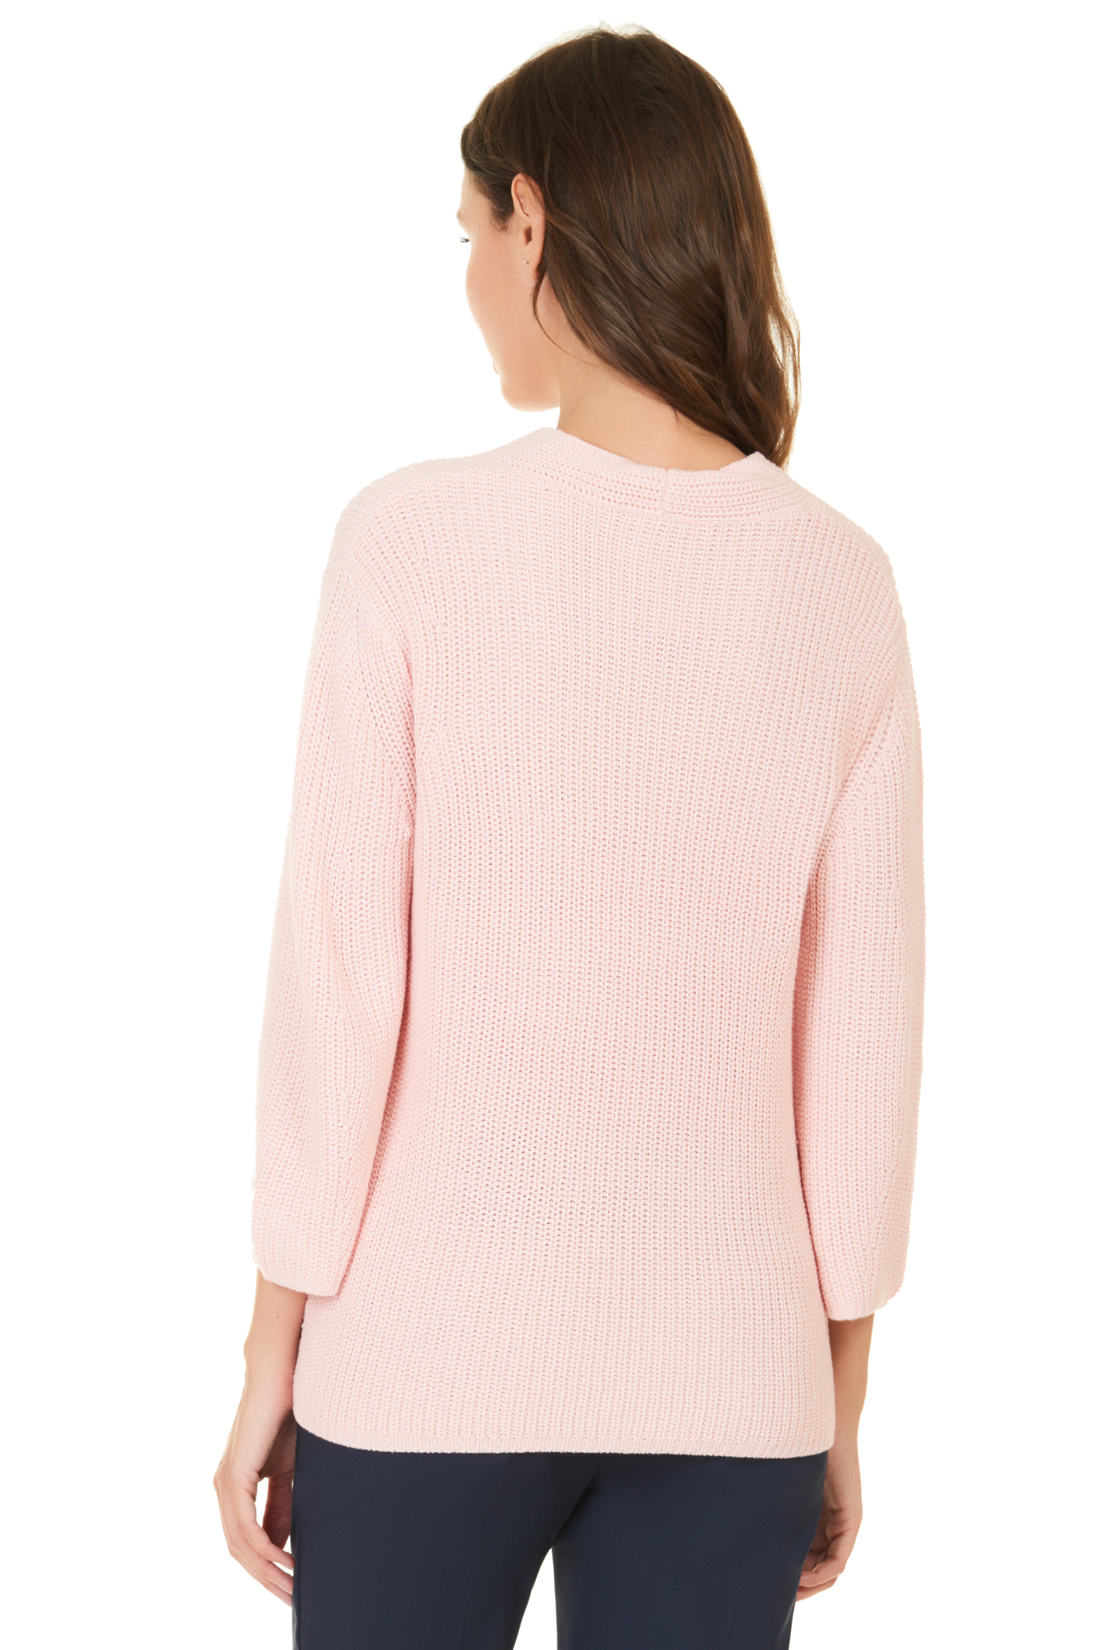 Пуловер оригинального кроя (арт. baon B137504), размер XXL, цвет розовый Пуловер оригинального кроя (арт. baon B137504) - фото 2